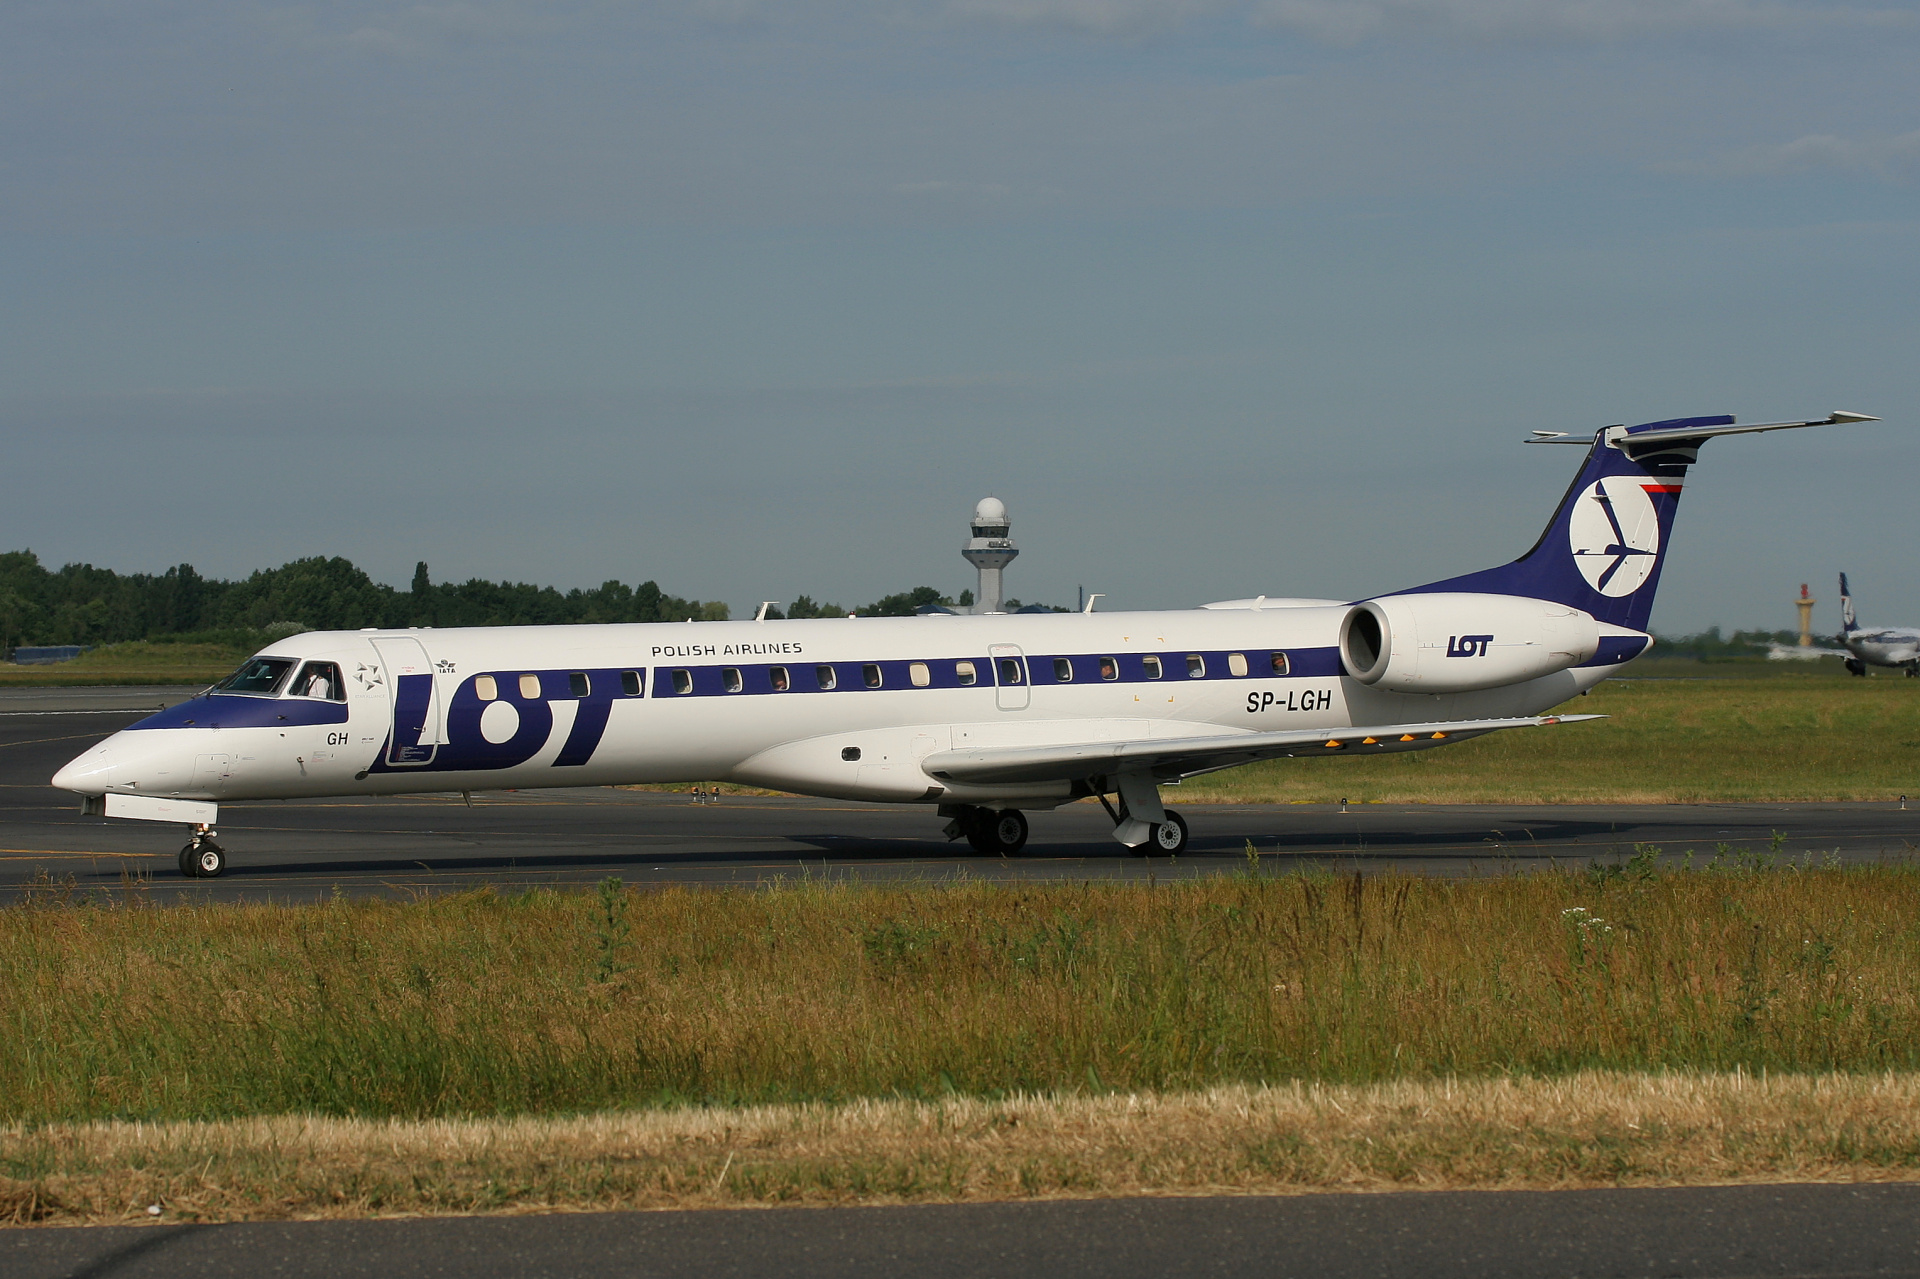 SP-LGH (Aircraft » EPWA Spotting » Embraer ERJ-145 » LOT Polish Airlines)